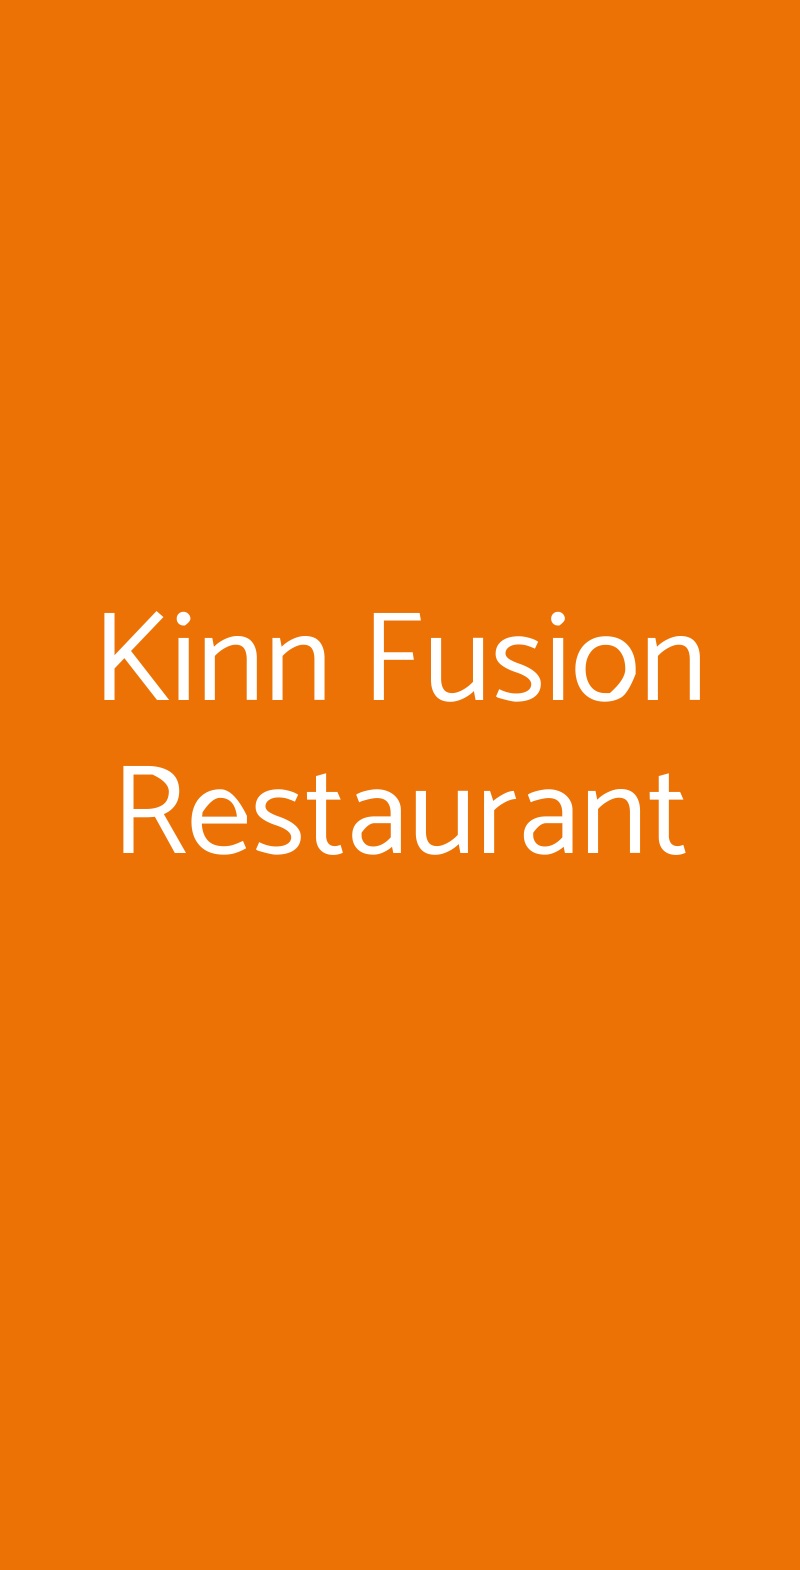 Kinn Fusion Restaurant Milano menù 1 pagina